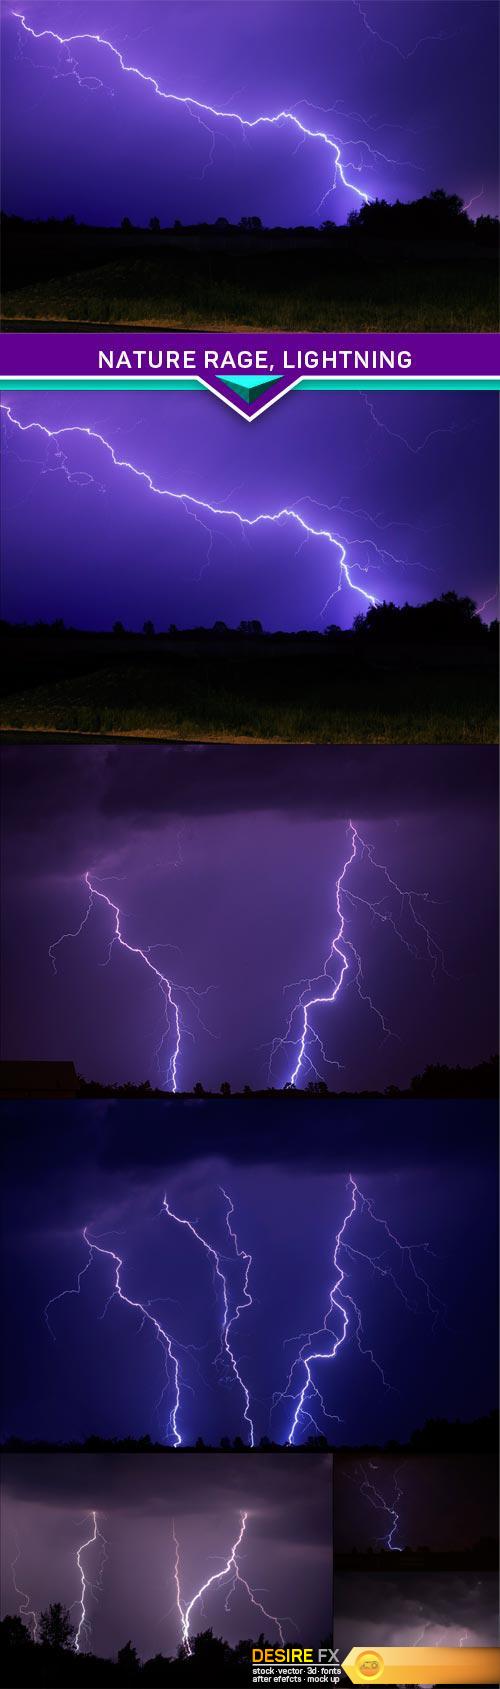 Nature rage, lightning 6X JPEG